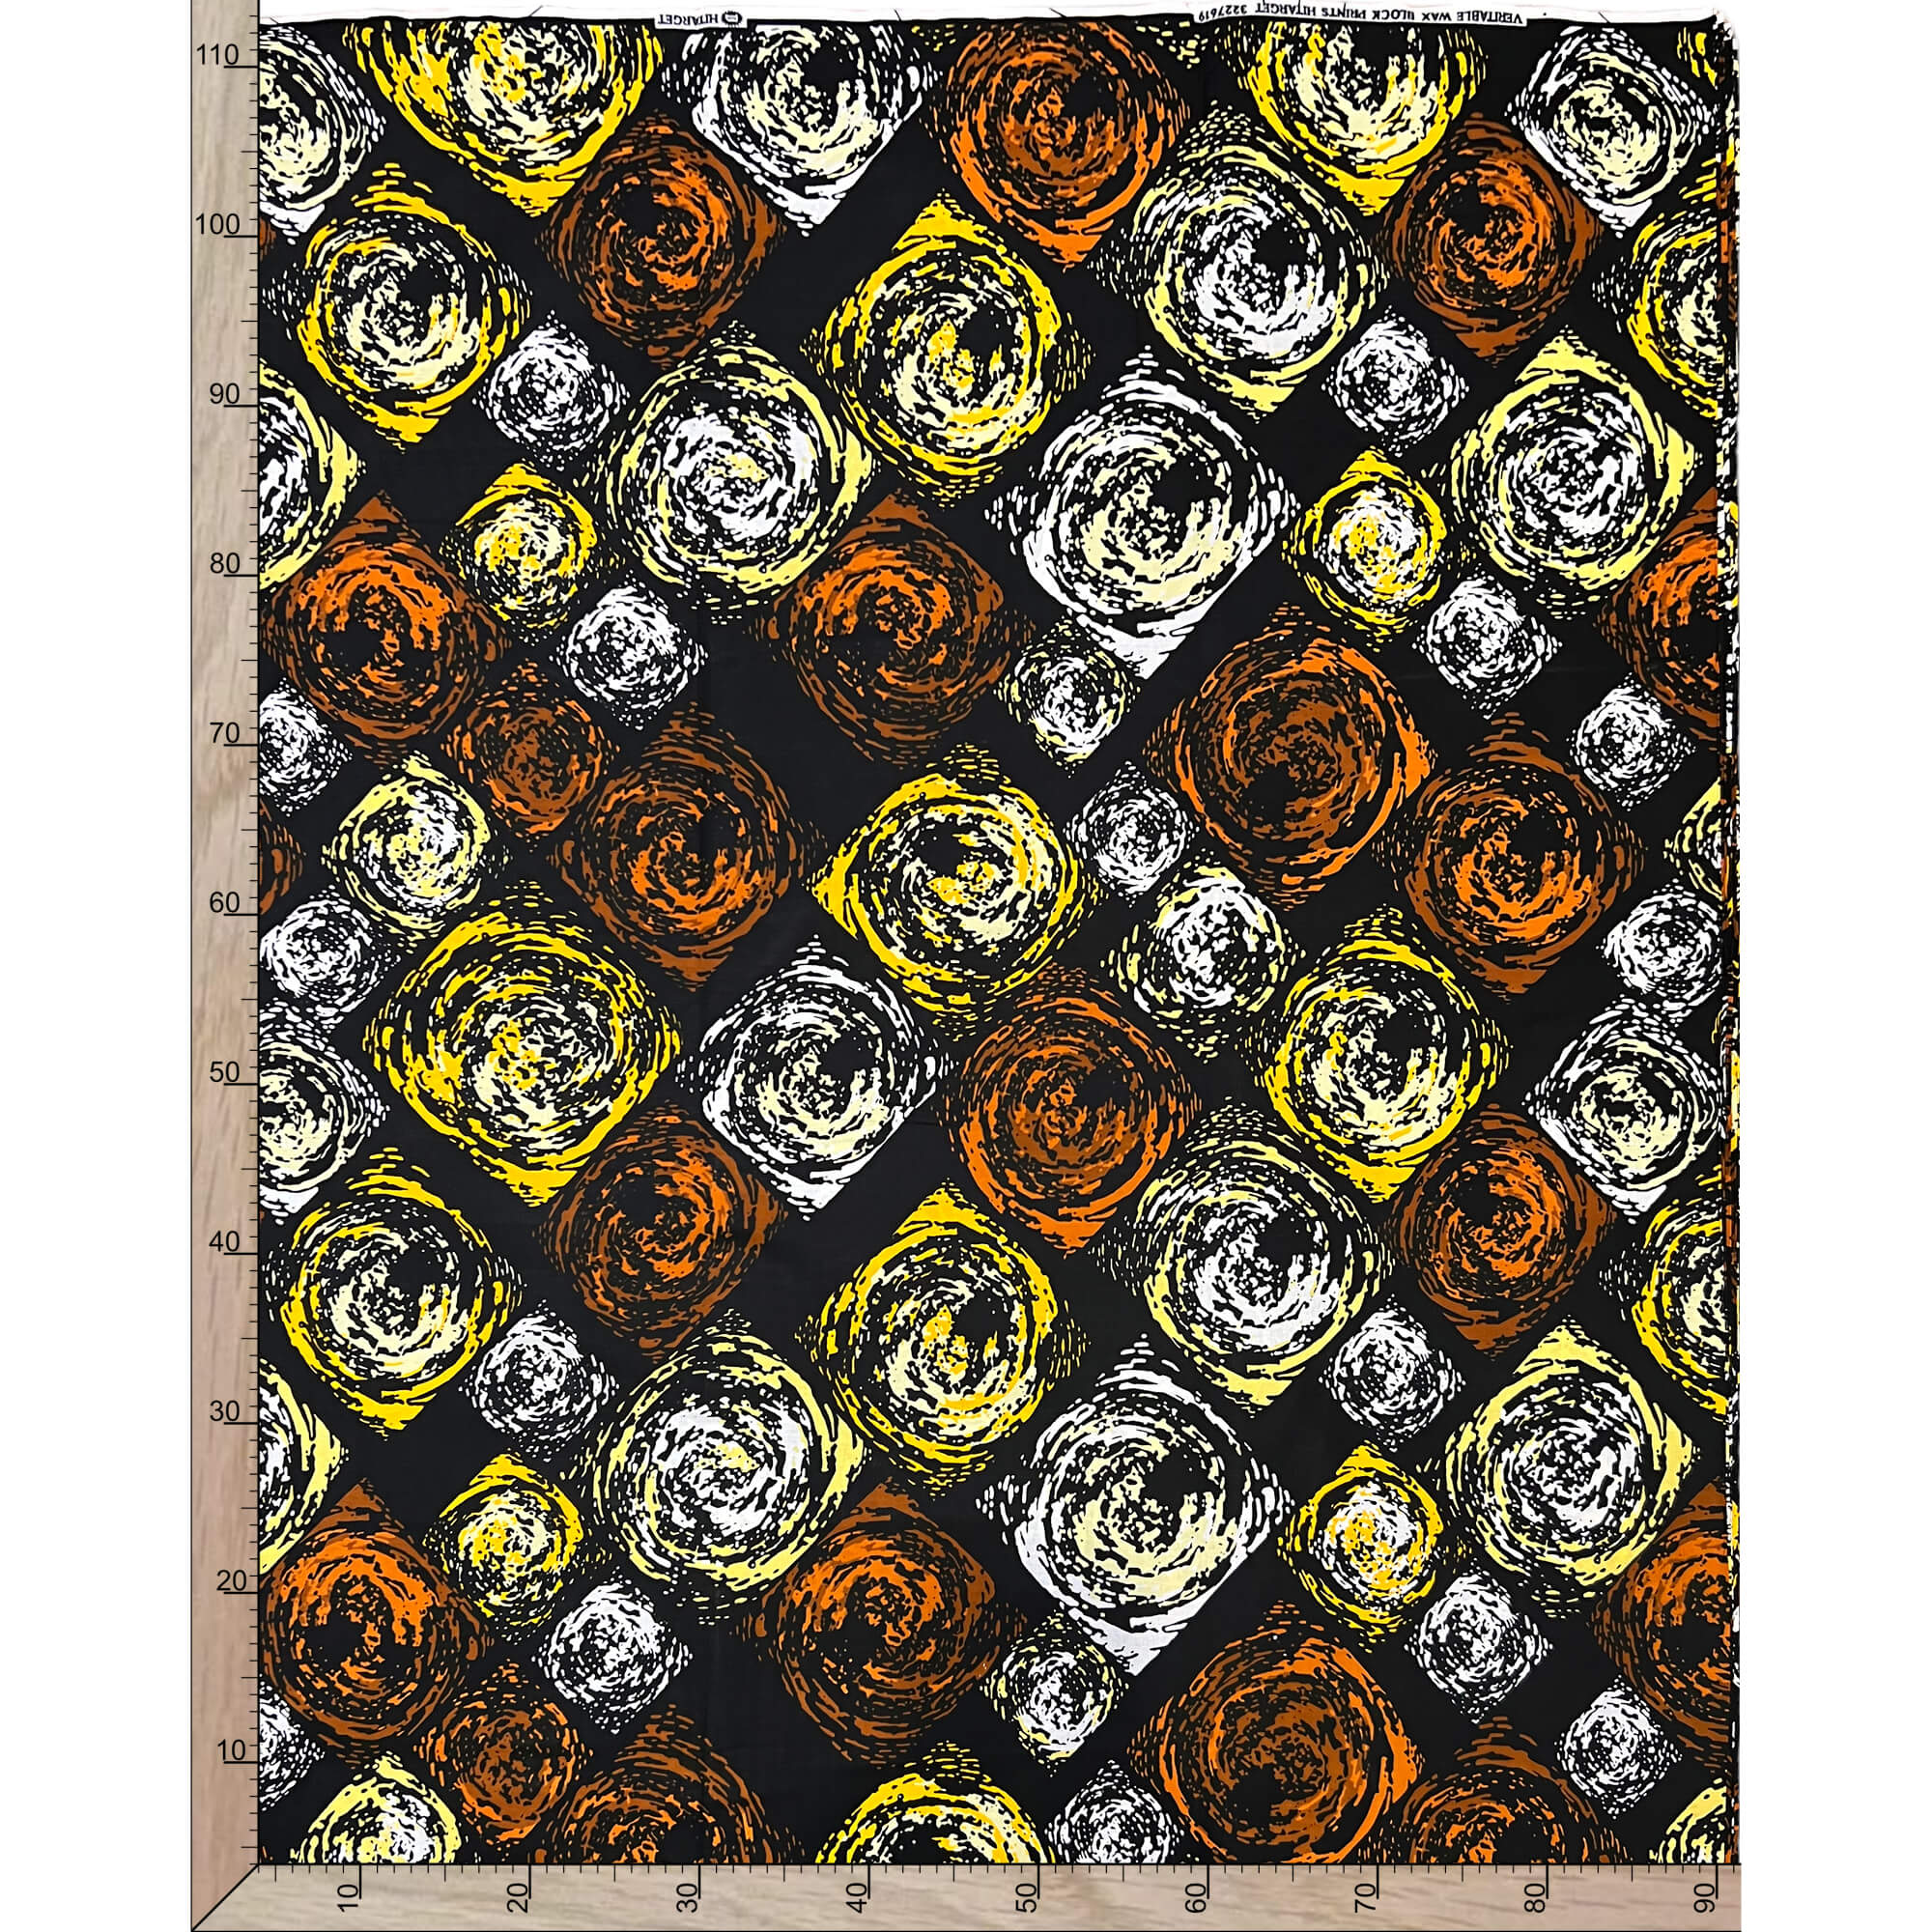 Tissu - Wax 100% coton - Graphiques - Orange / Jaune / Noir